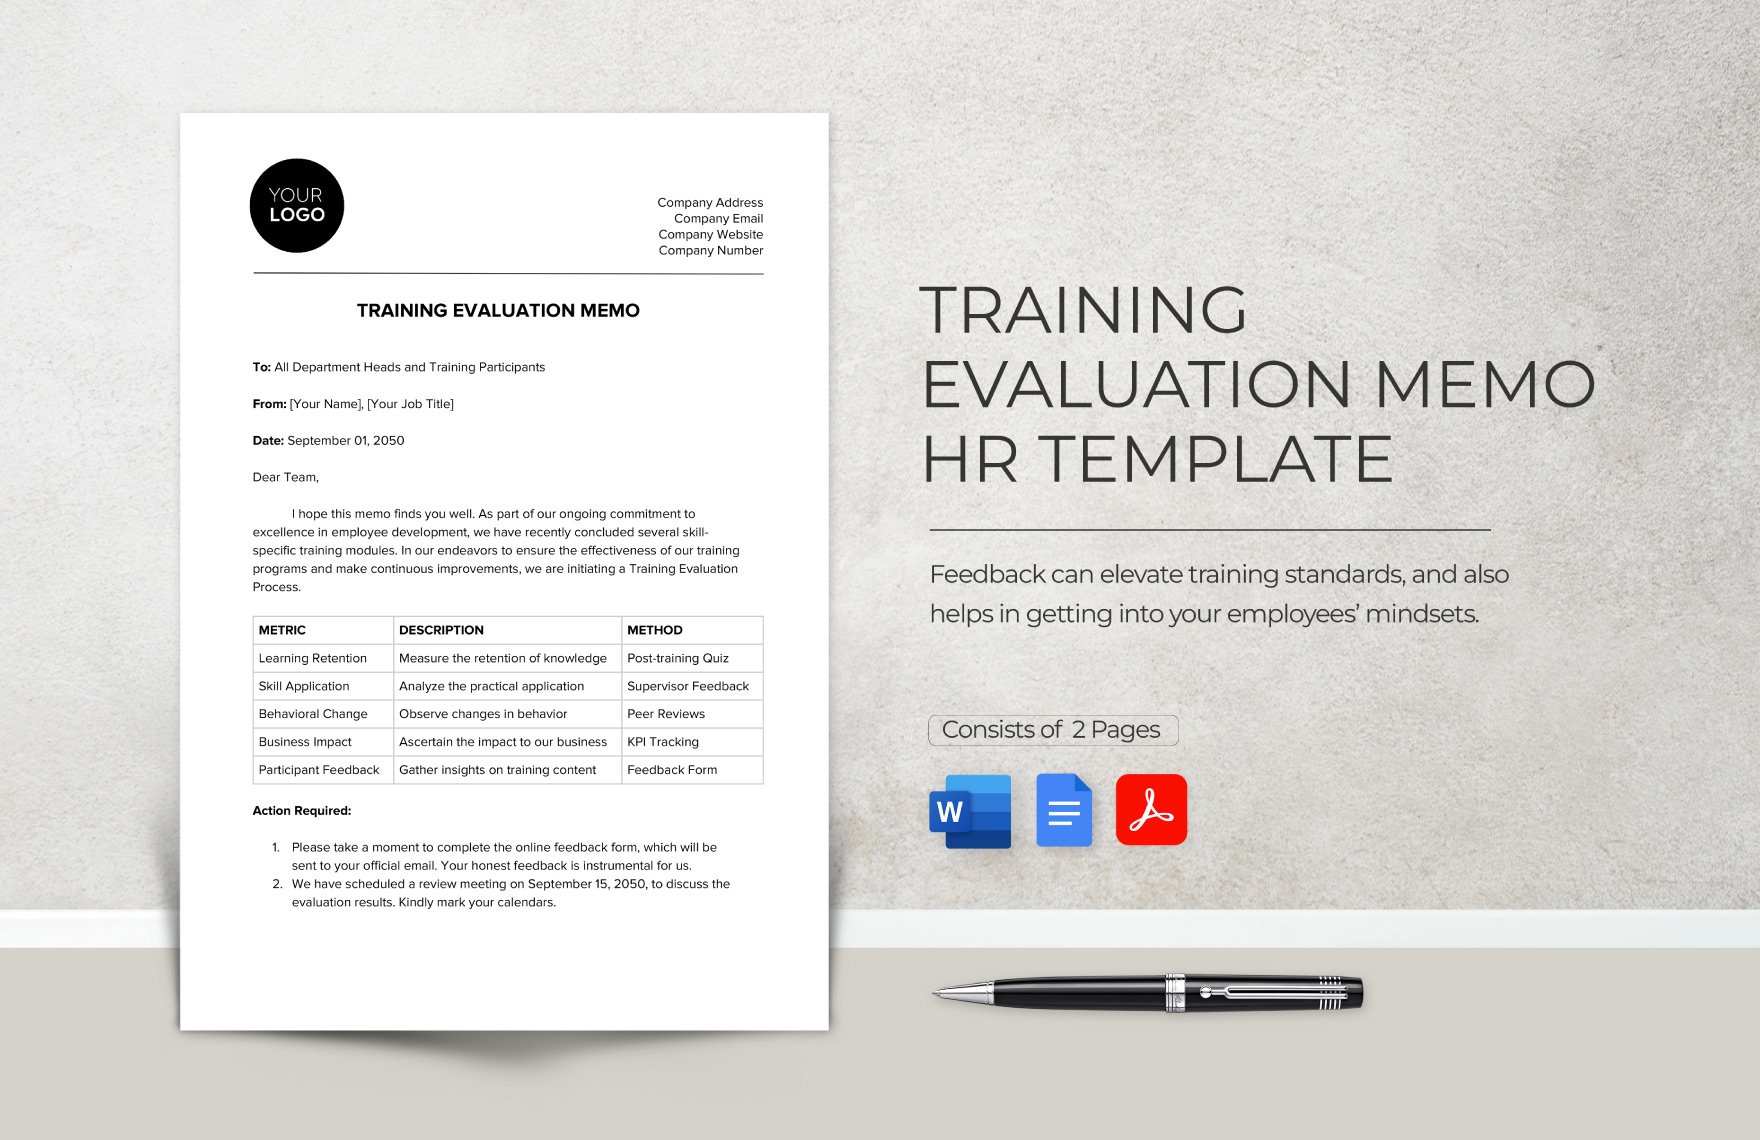 Training Evaluation Memo HR Template